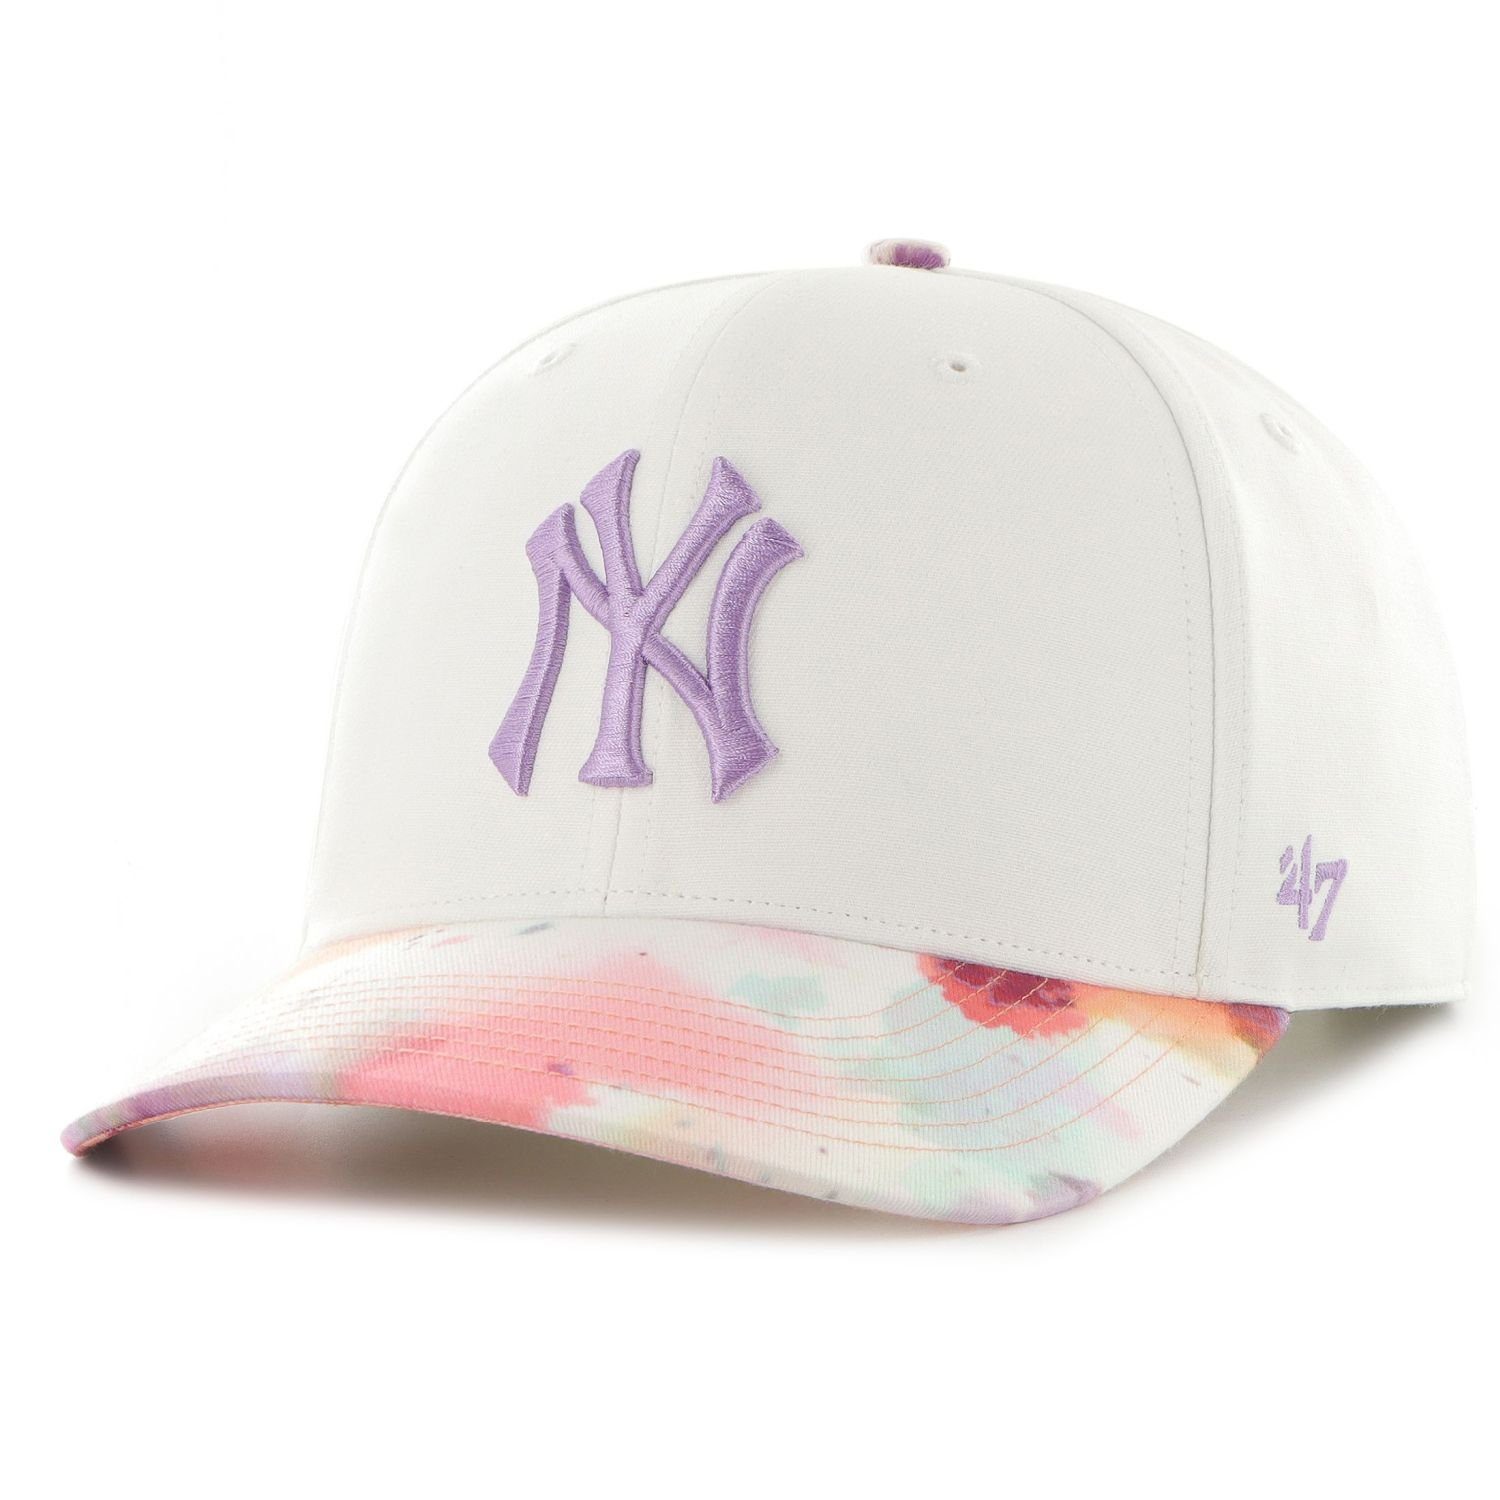 GLOW New Yankees York '47 Brand DAY Cap Snapback